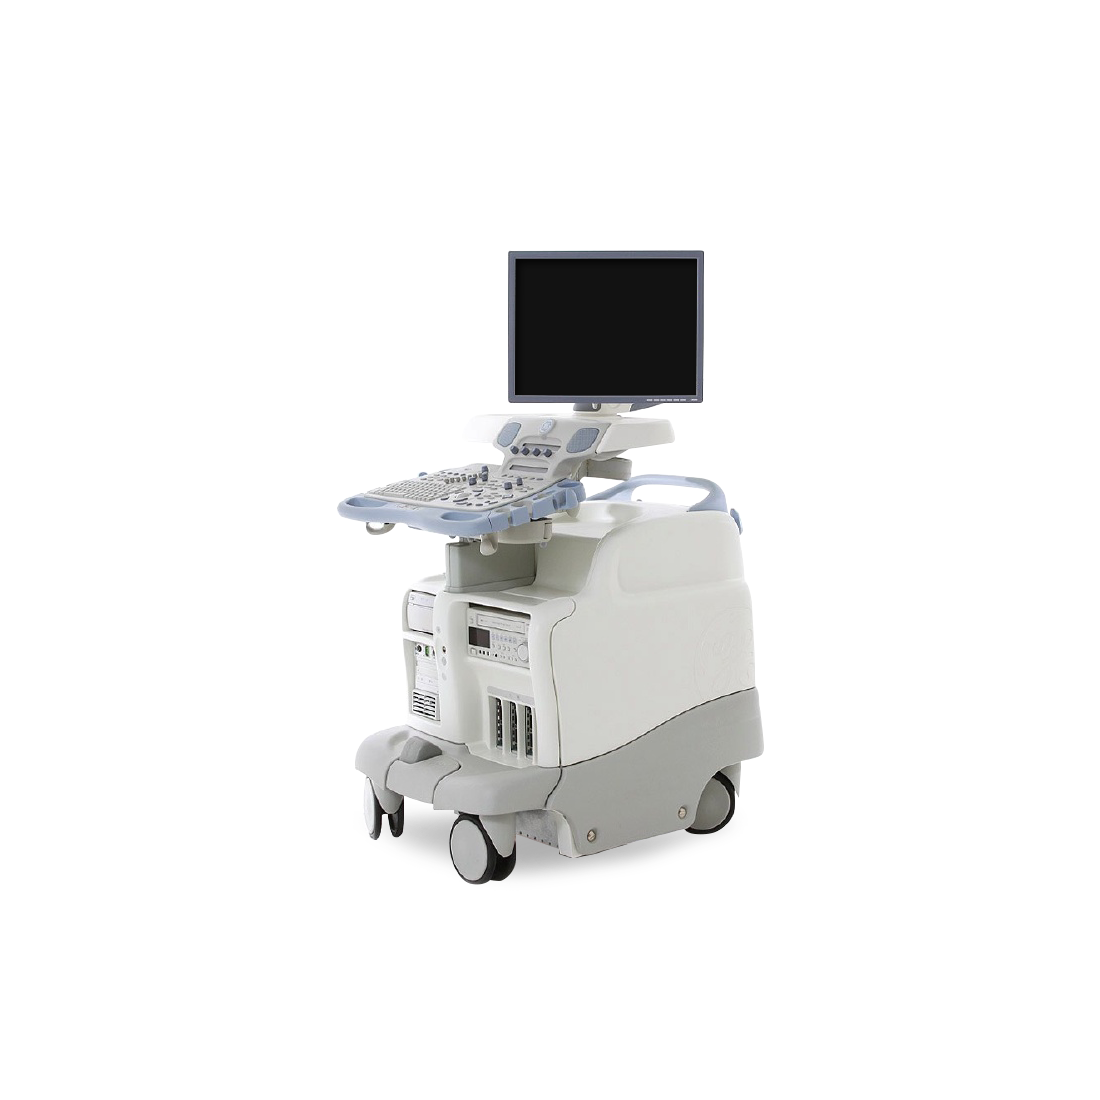 GE Vivid 7 Dimension Ultrasound Machine